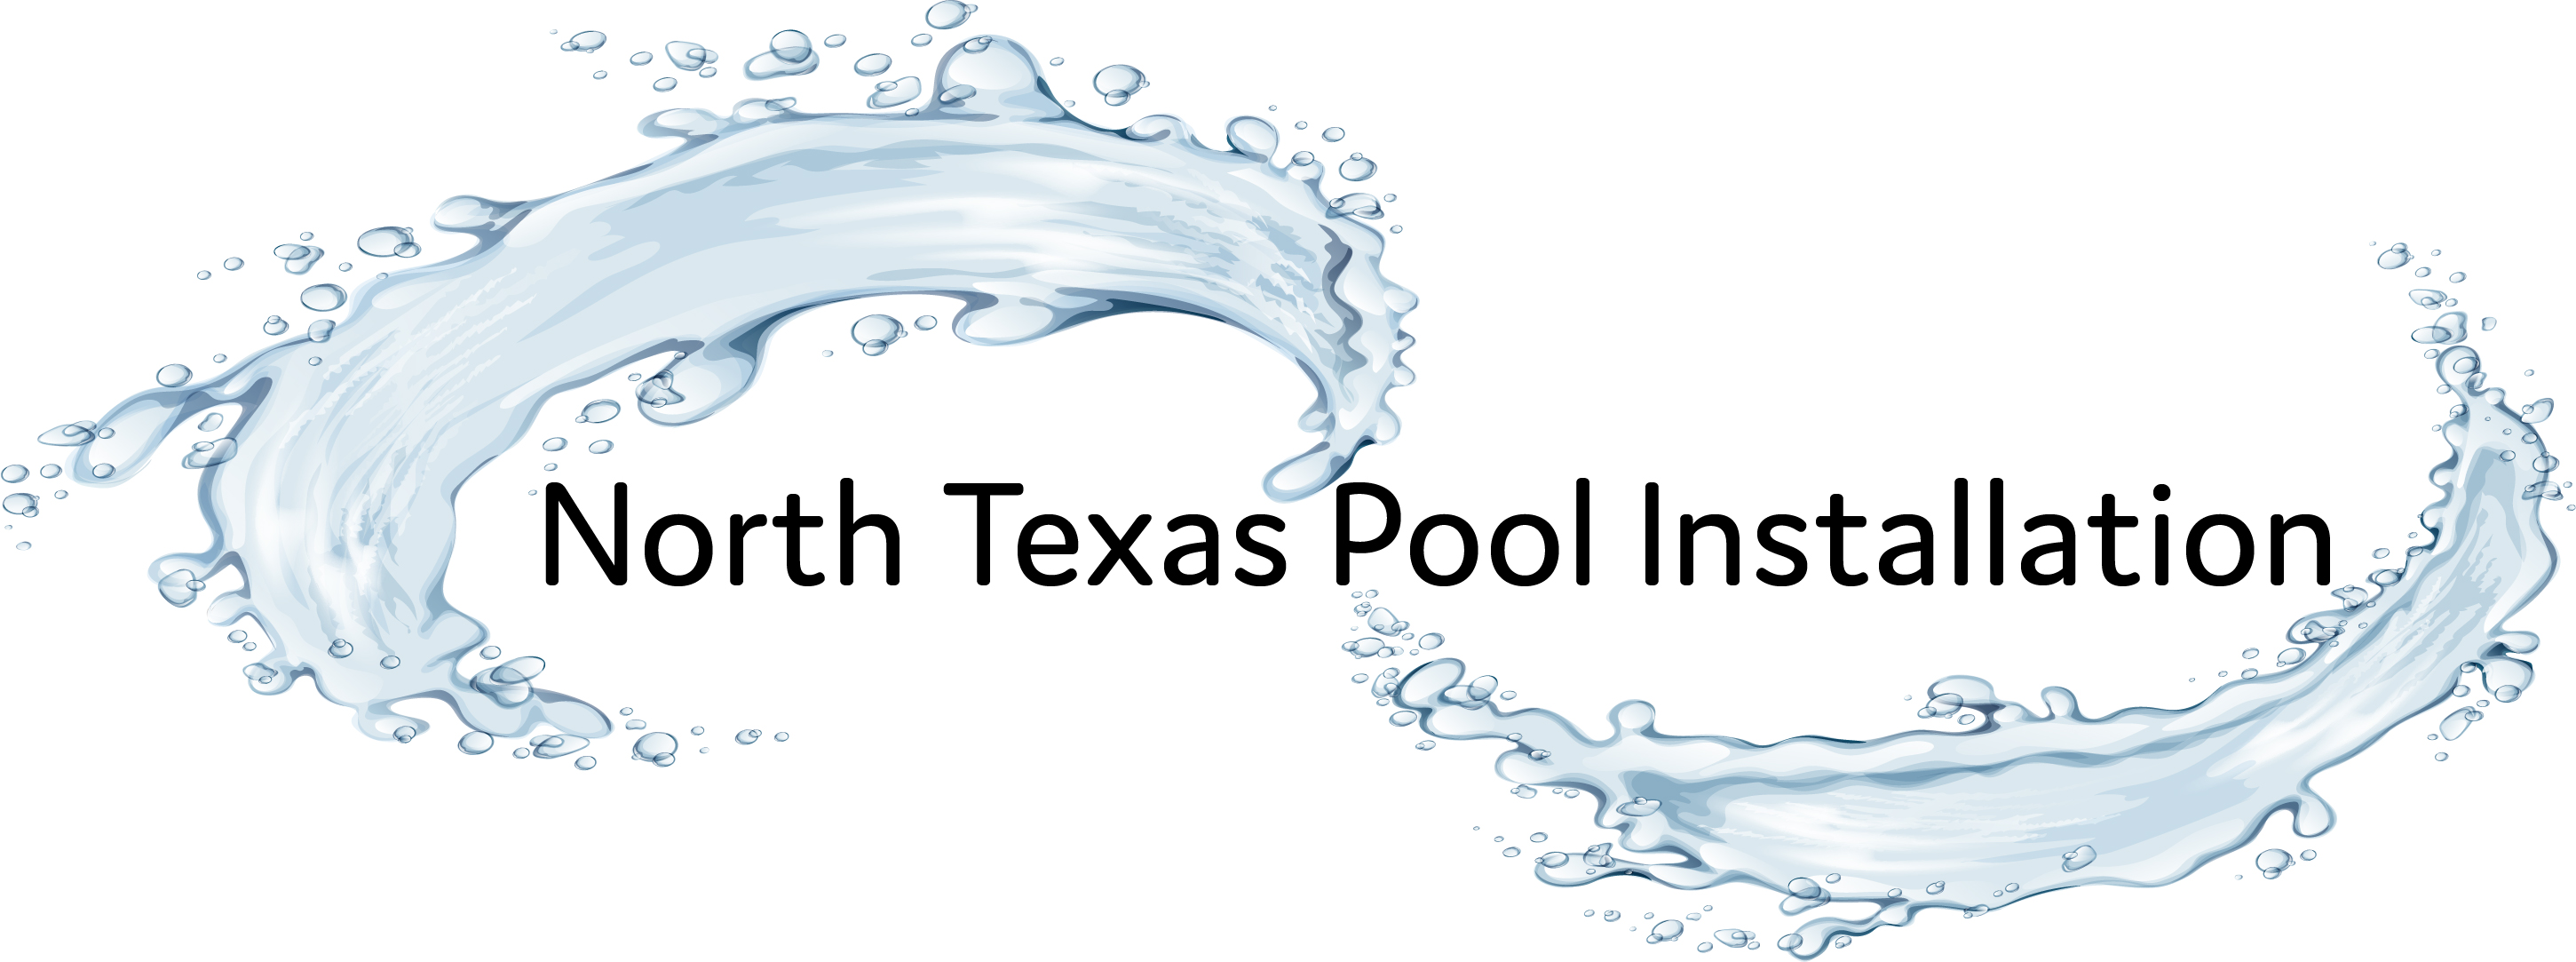 North Texas Pool Installation Logo